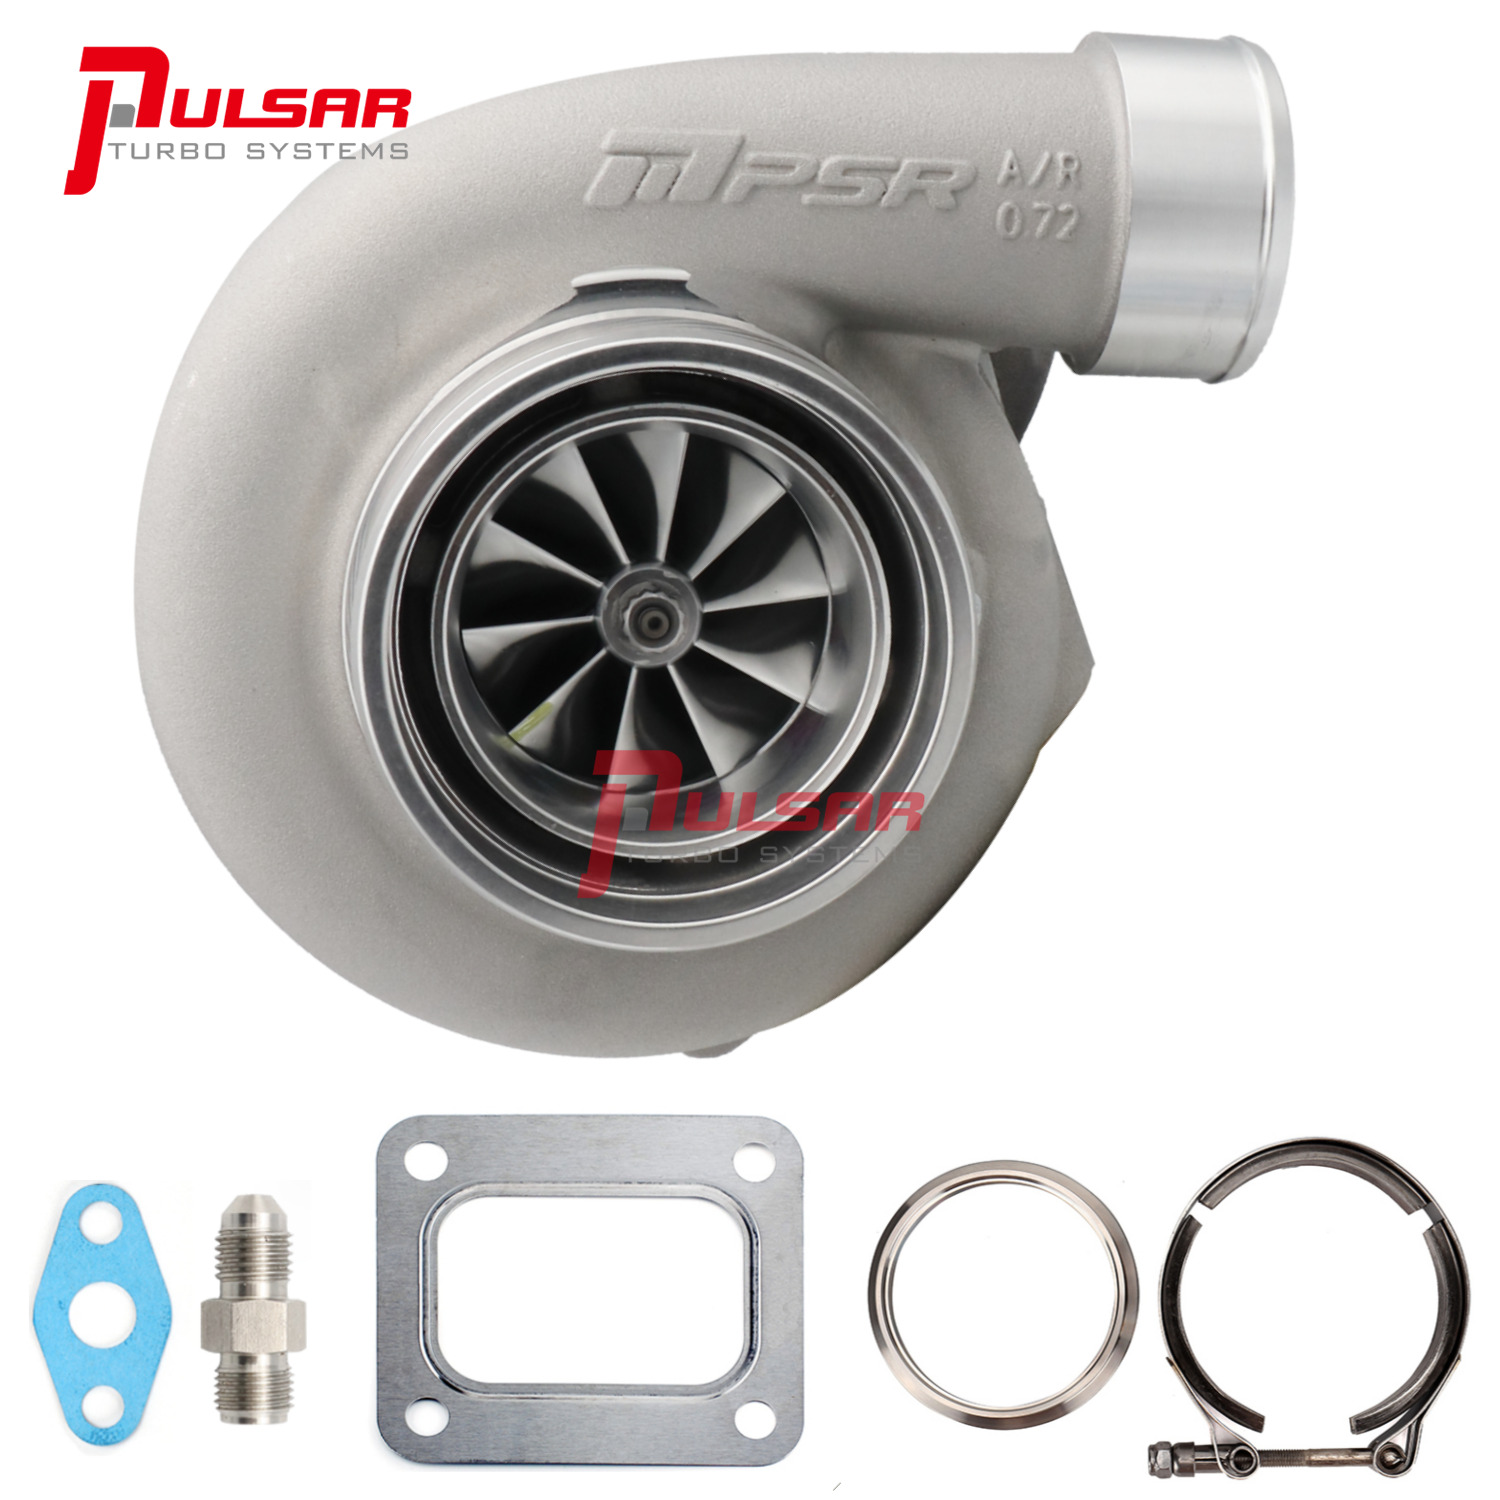 Pulsar Turbo PSR3582 GENII Dual Ball Bearing Turbo T4 Open Inlet, Vband 0.82 A/R